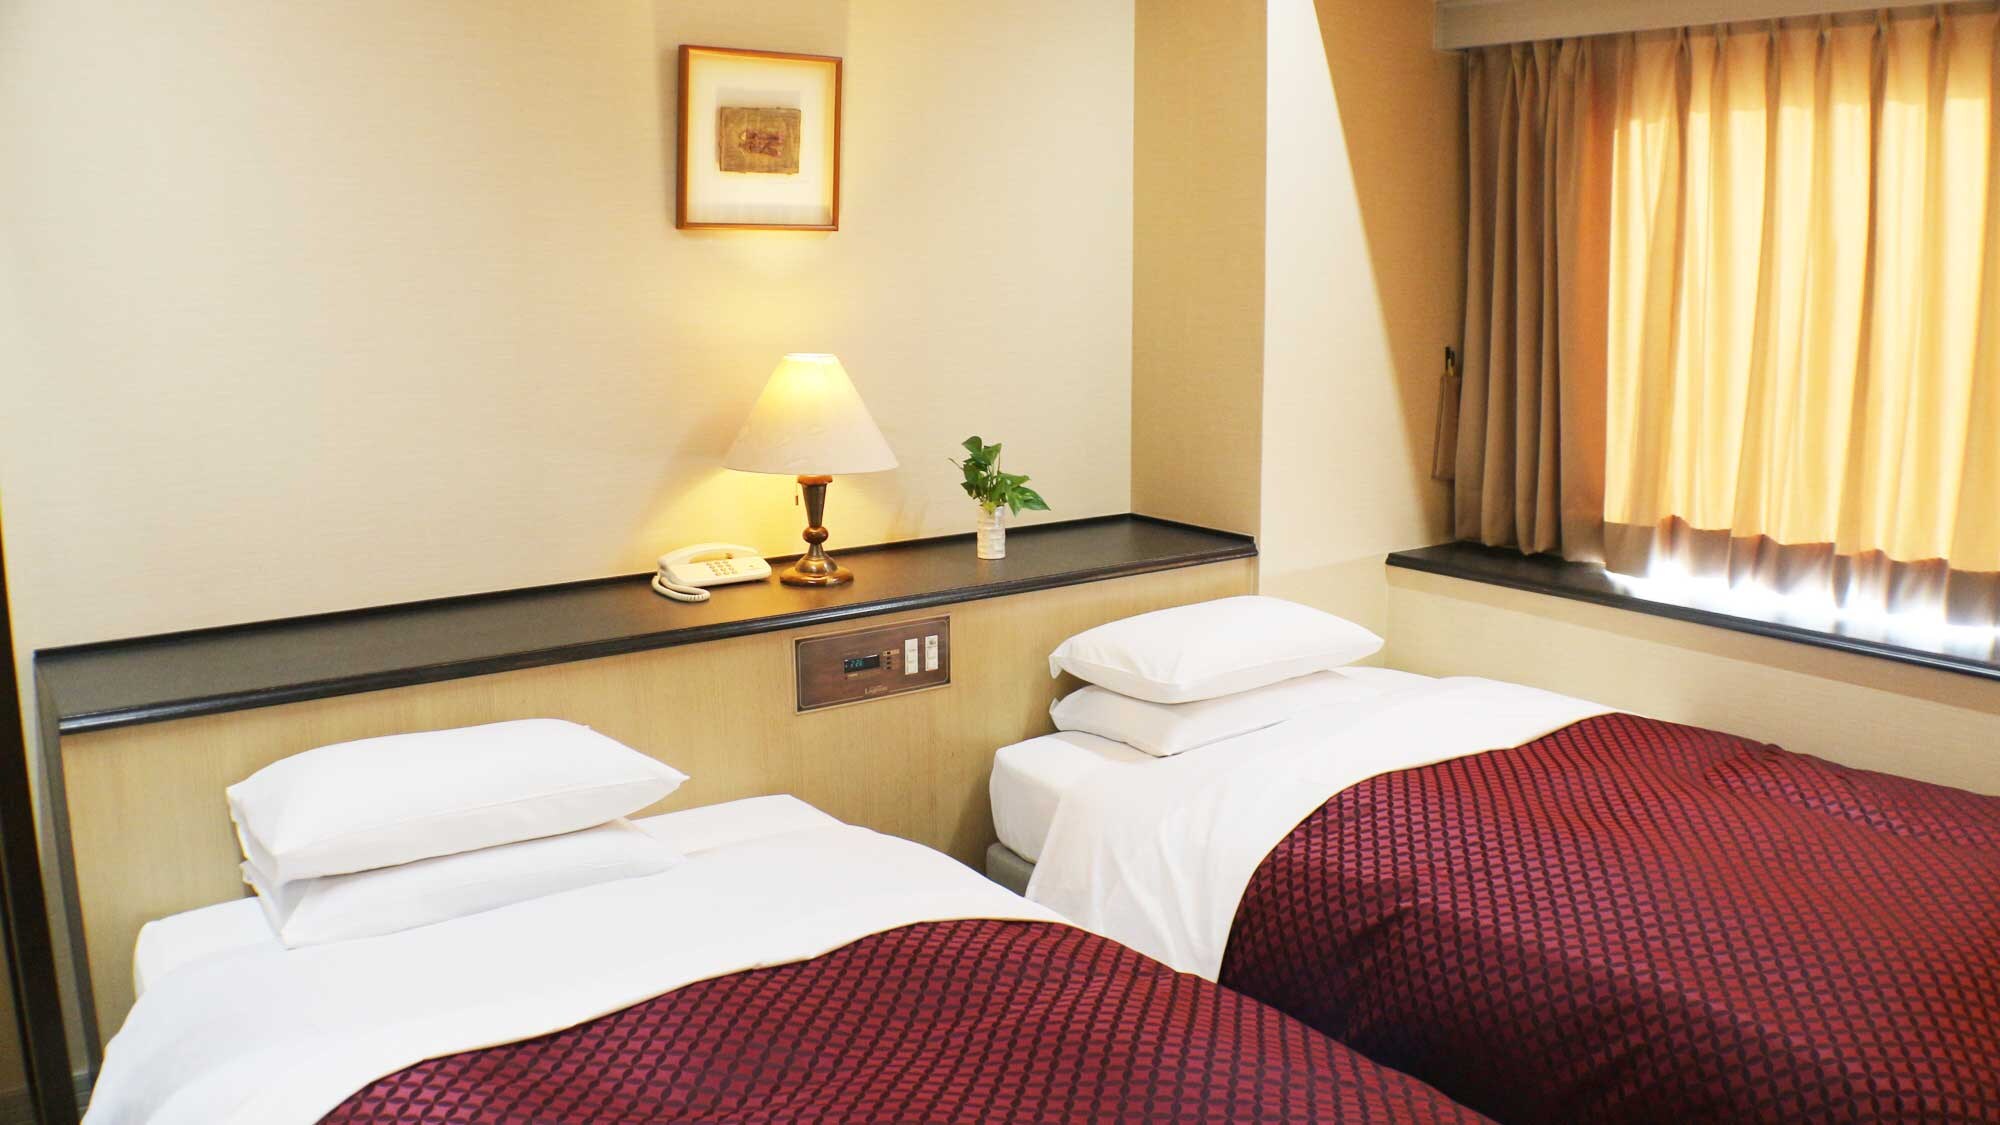 ■ Twin deluxe room 25-28 square meters, bed width 120 cm